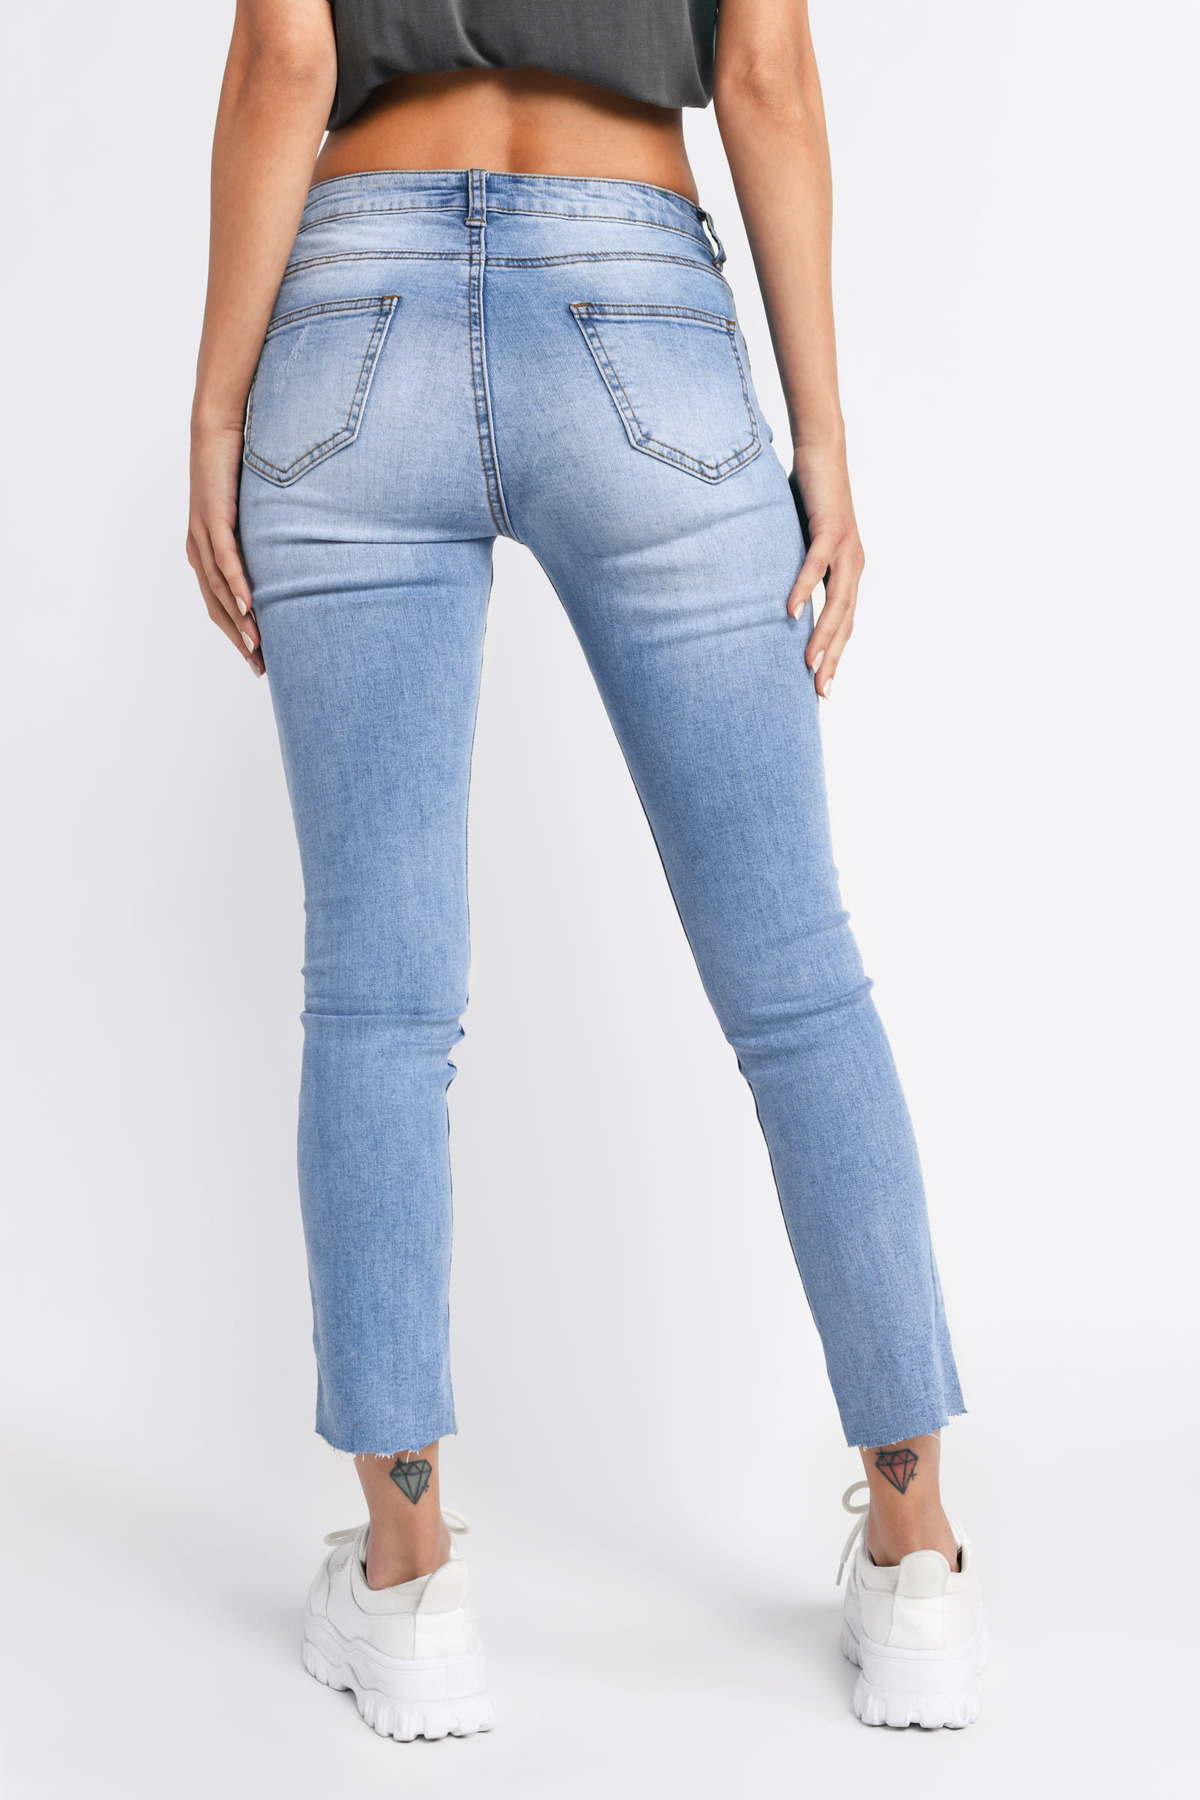 Jefferson Mid Rise Distressed Skinny Jeans in Light Wash - $27 | Tobi US